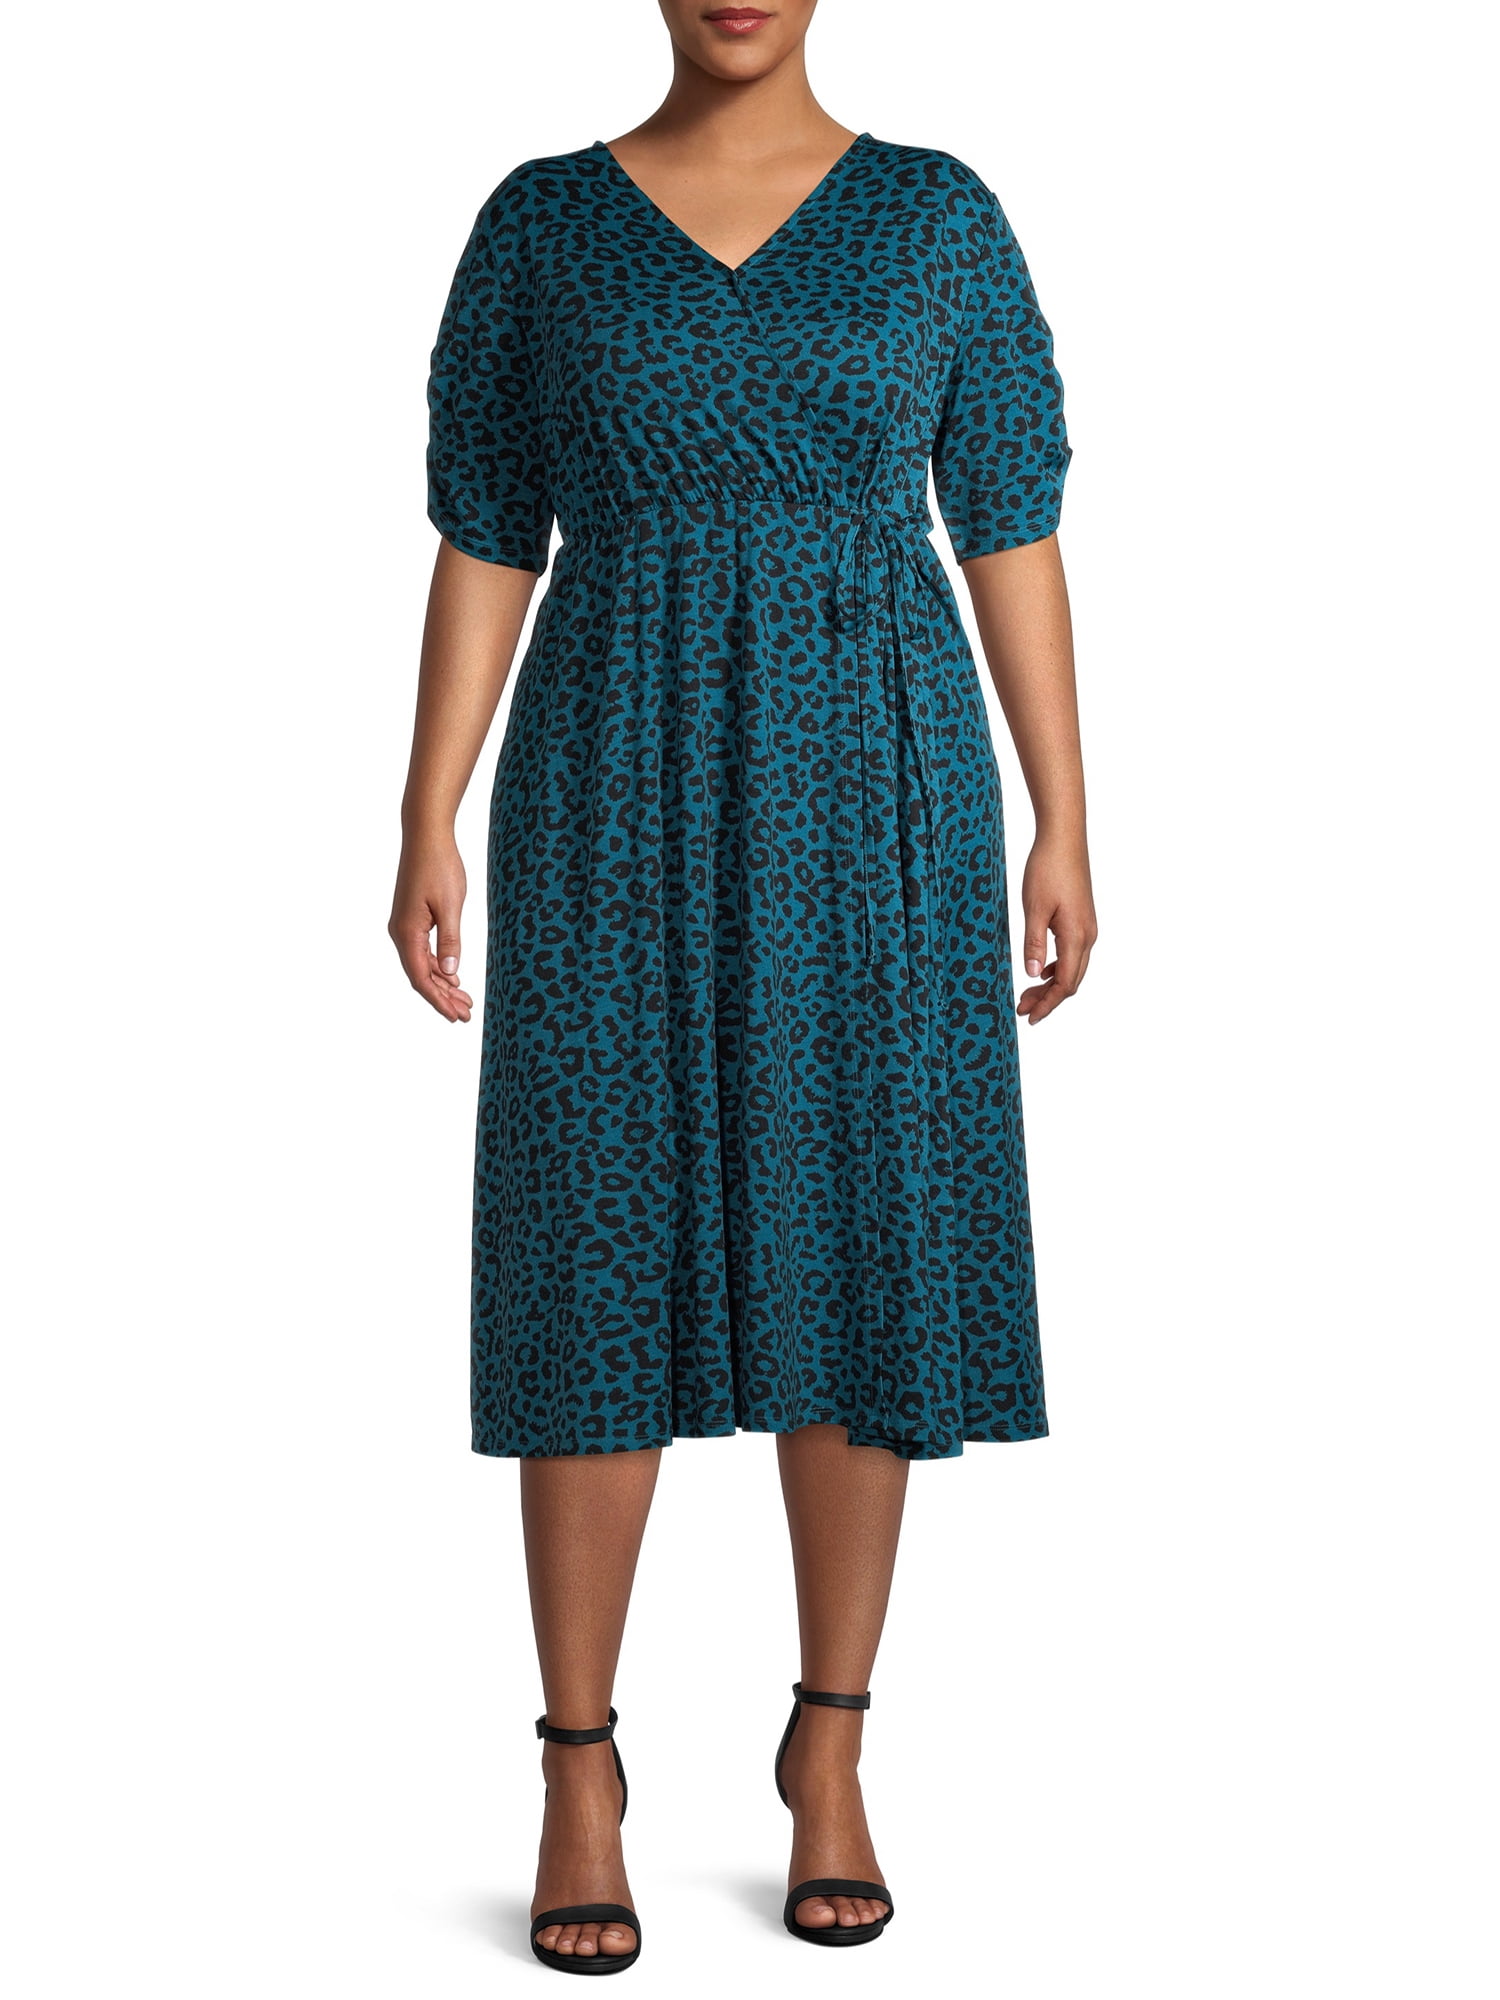 Terra \u0026 Sky Women's Plus Size Leopard Print Midi Faux Wrap Dress -  Walmart.com